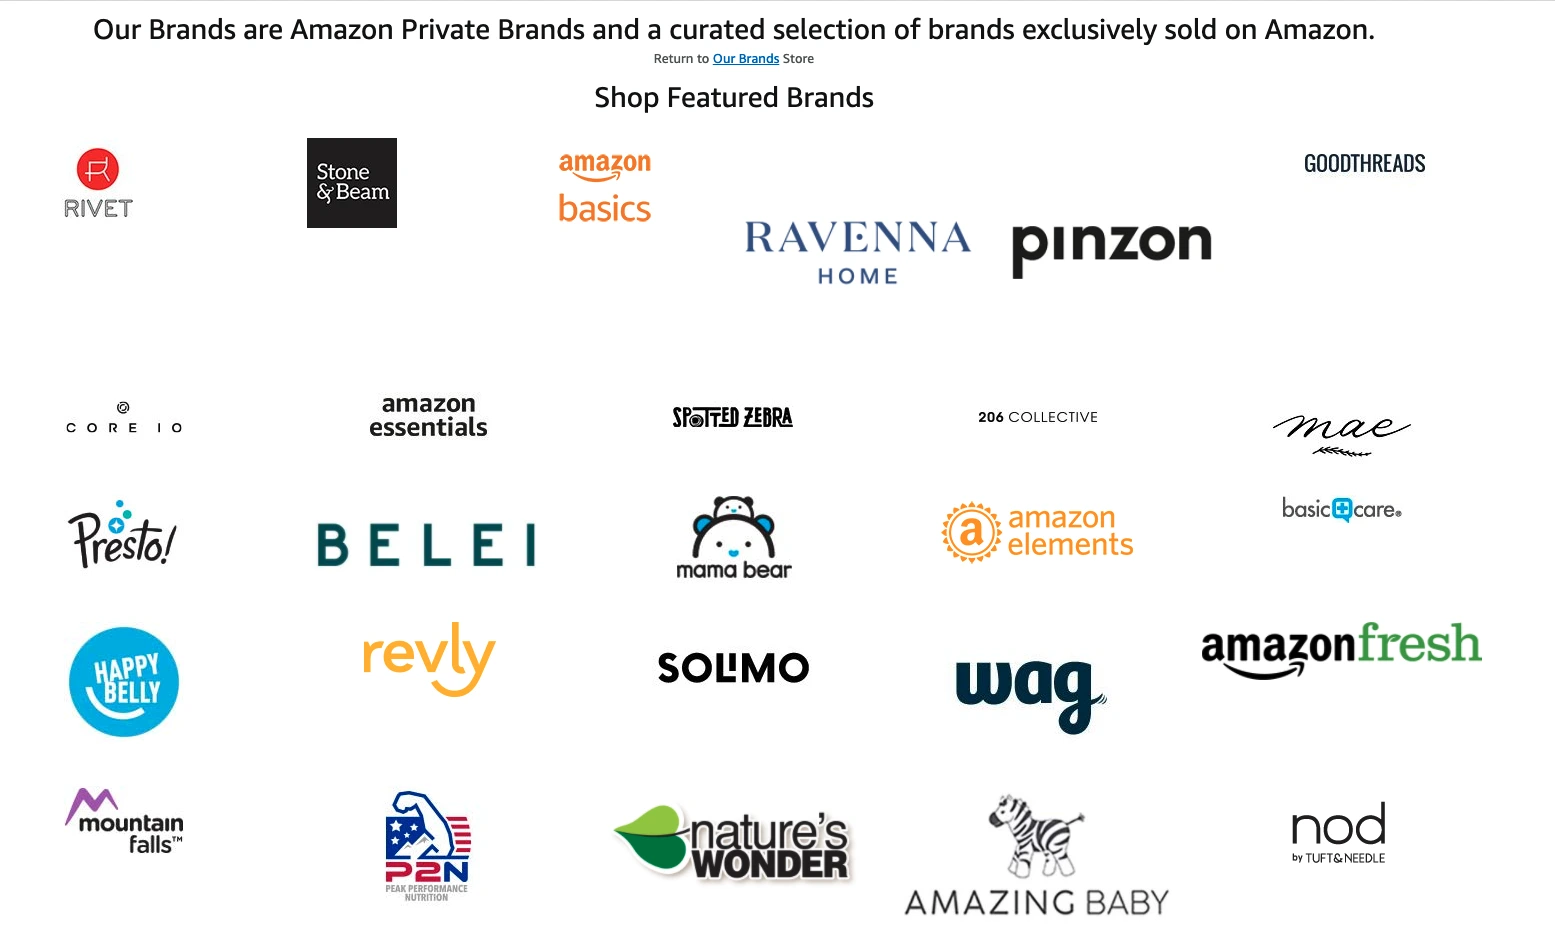 Scale Your Amazon Business | Helium 10